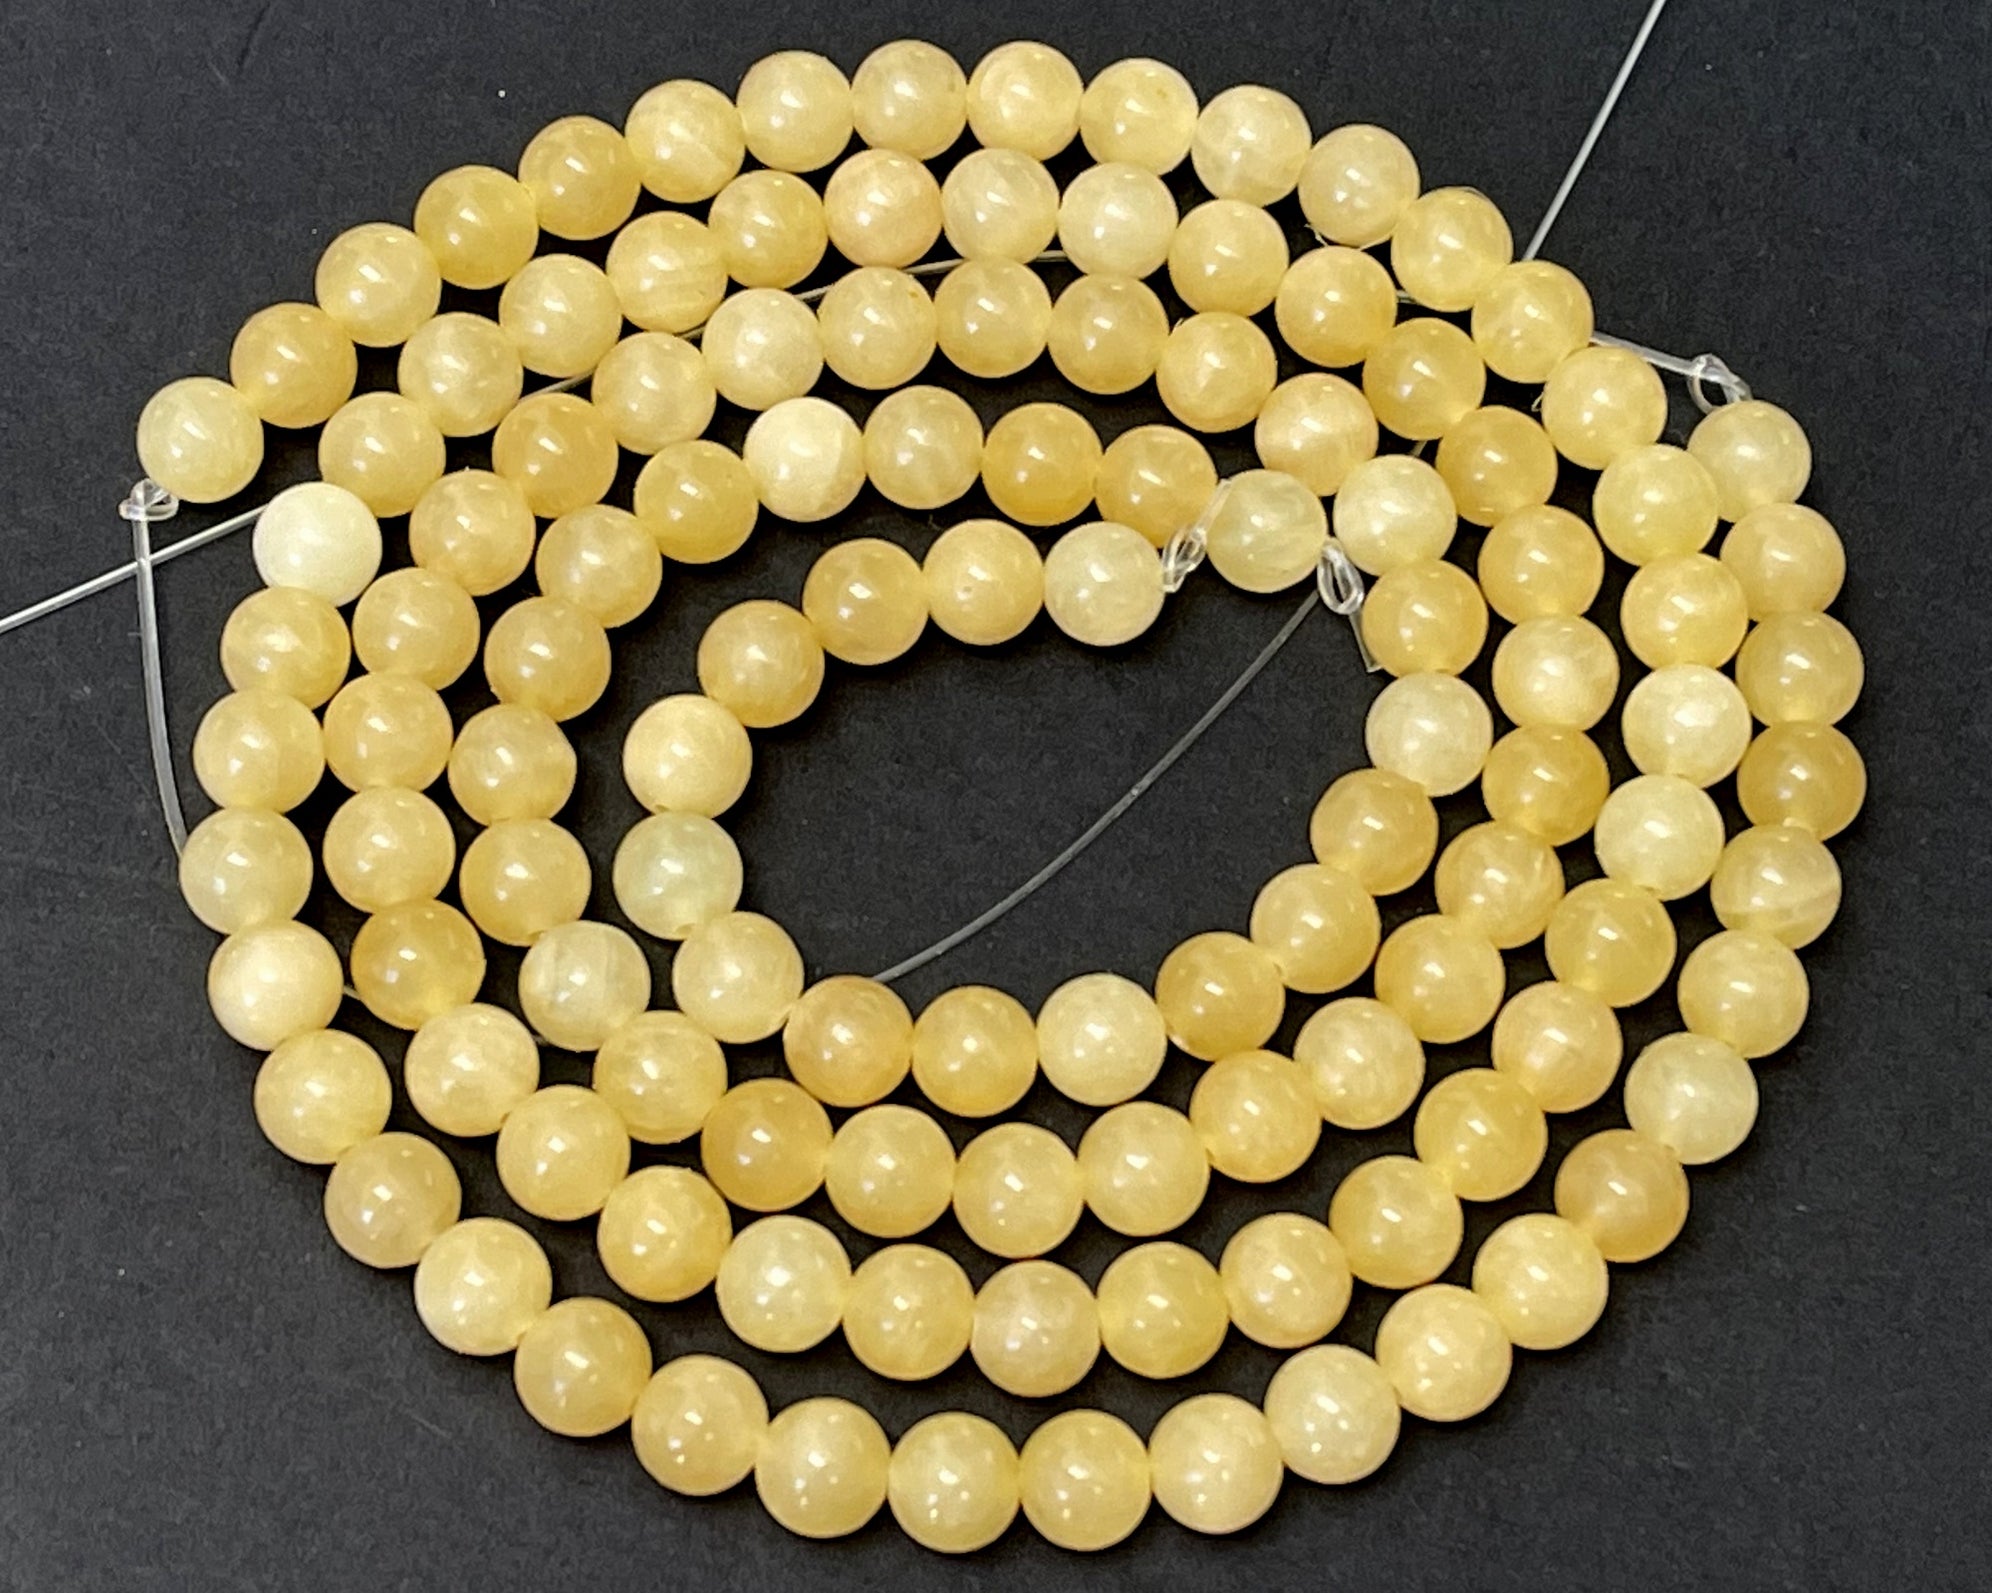 Oz Beads Online Bead Store - Australia